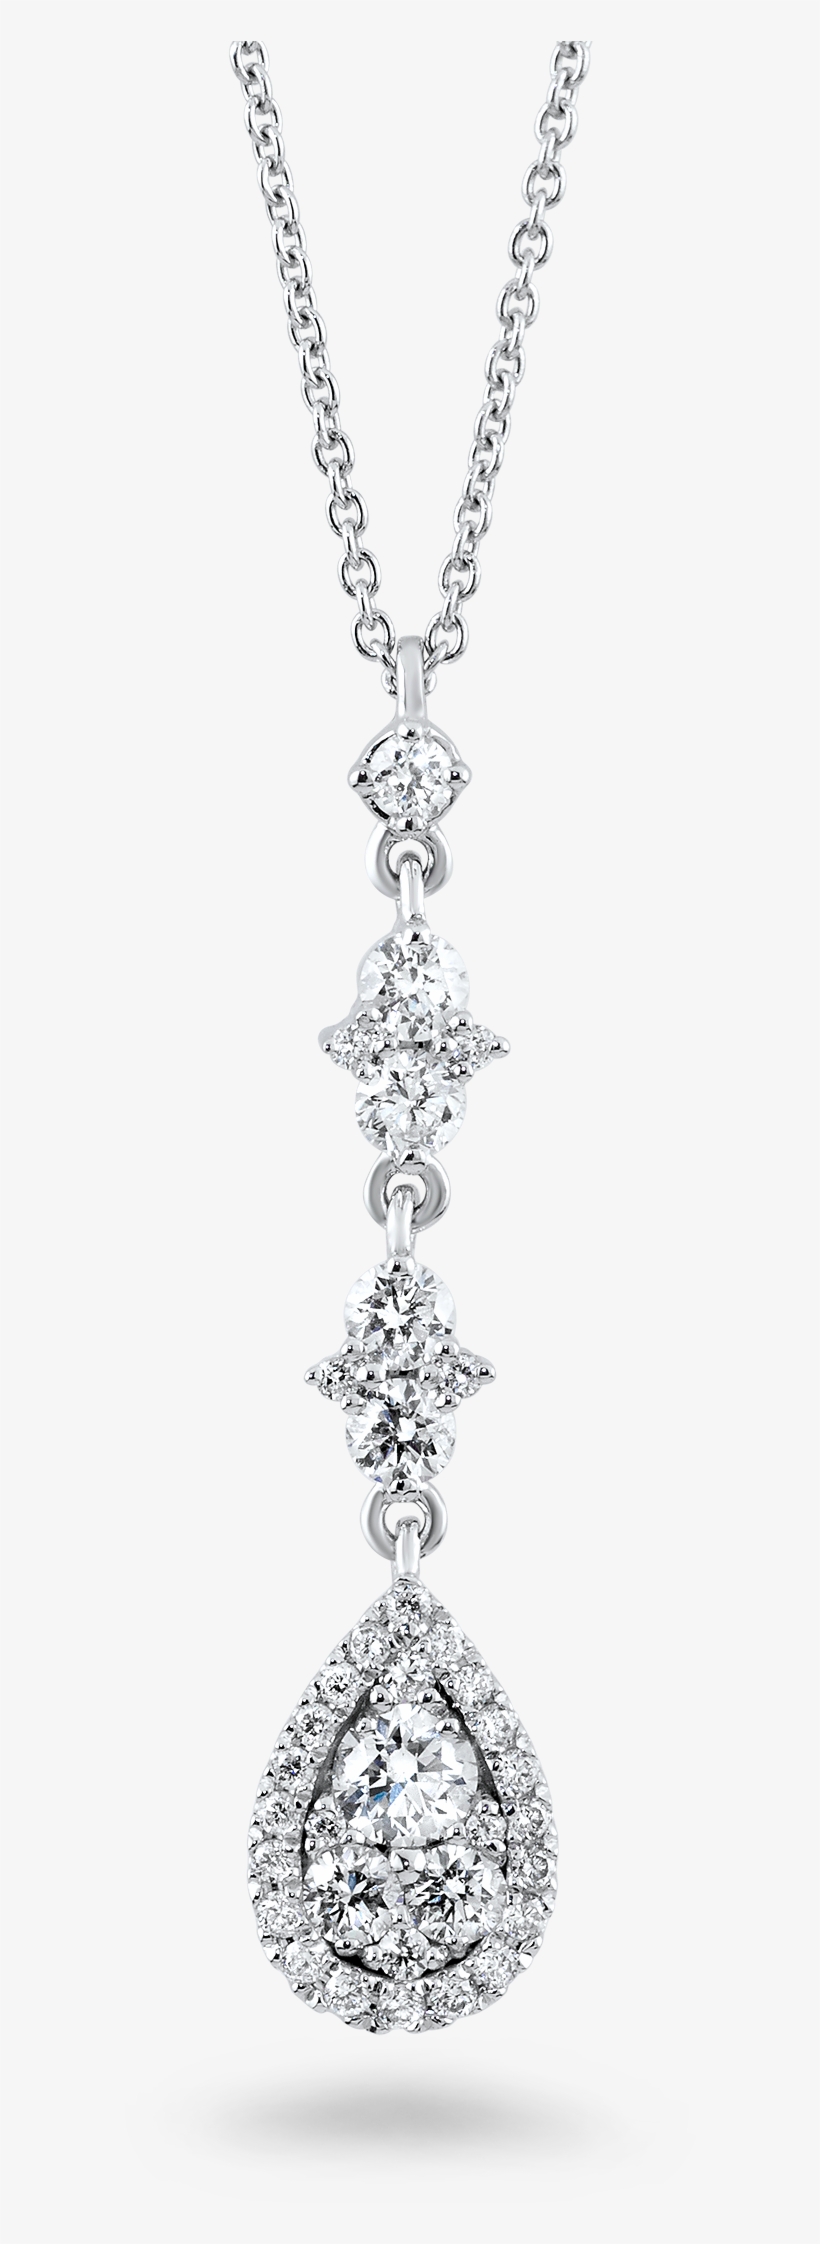 Diamond Necklace Png File - Diamond, transparent png #1551189